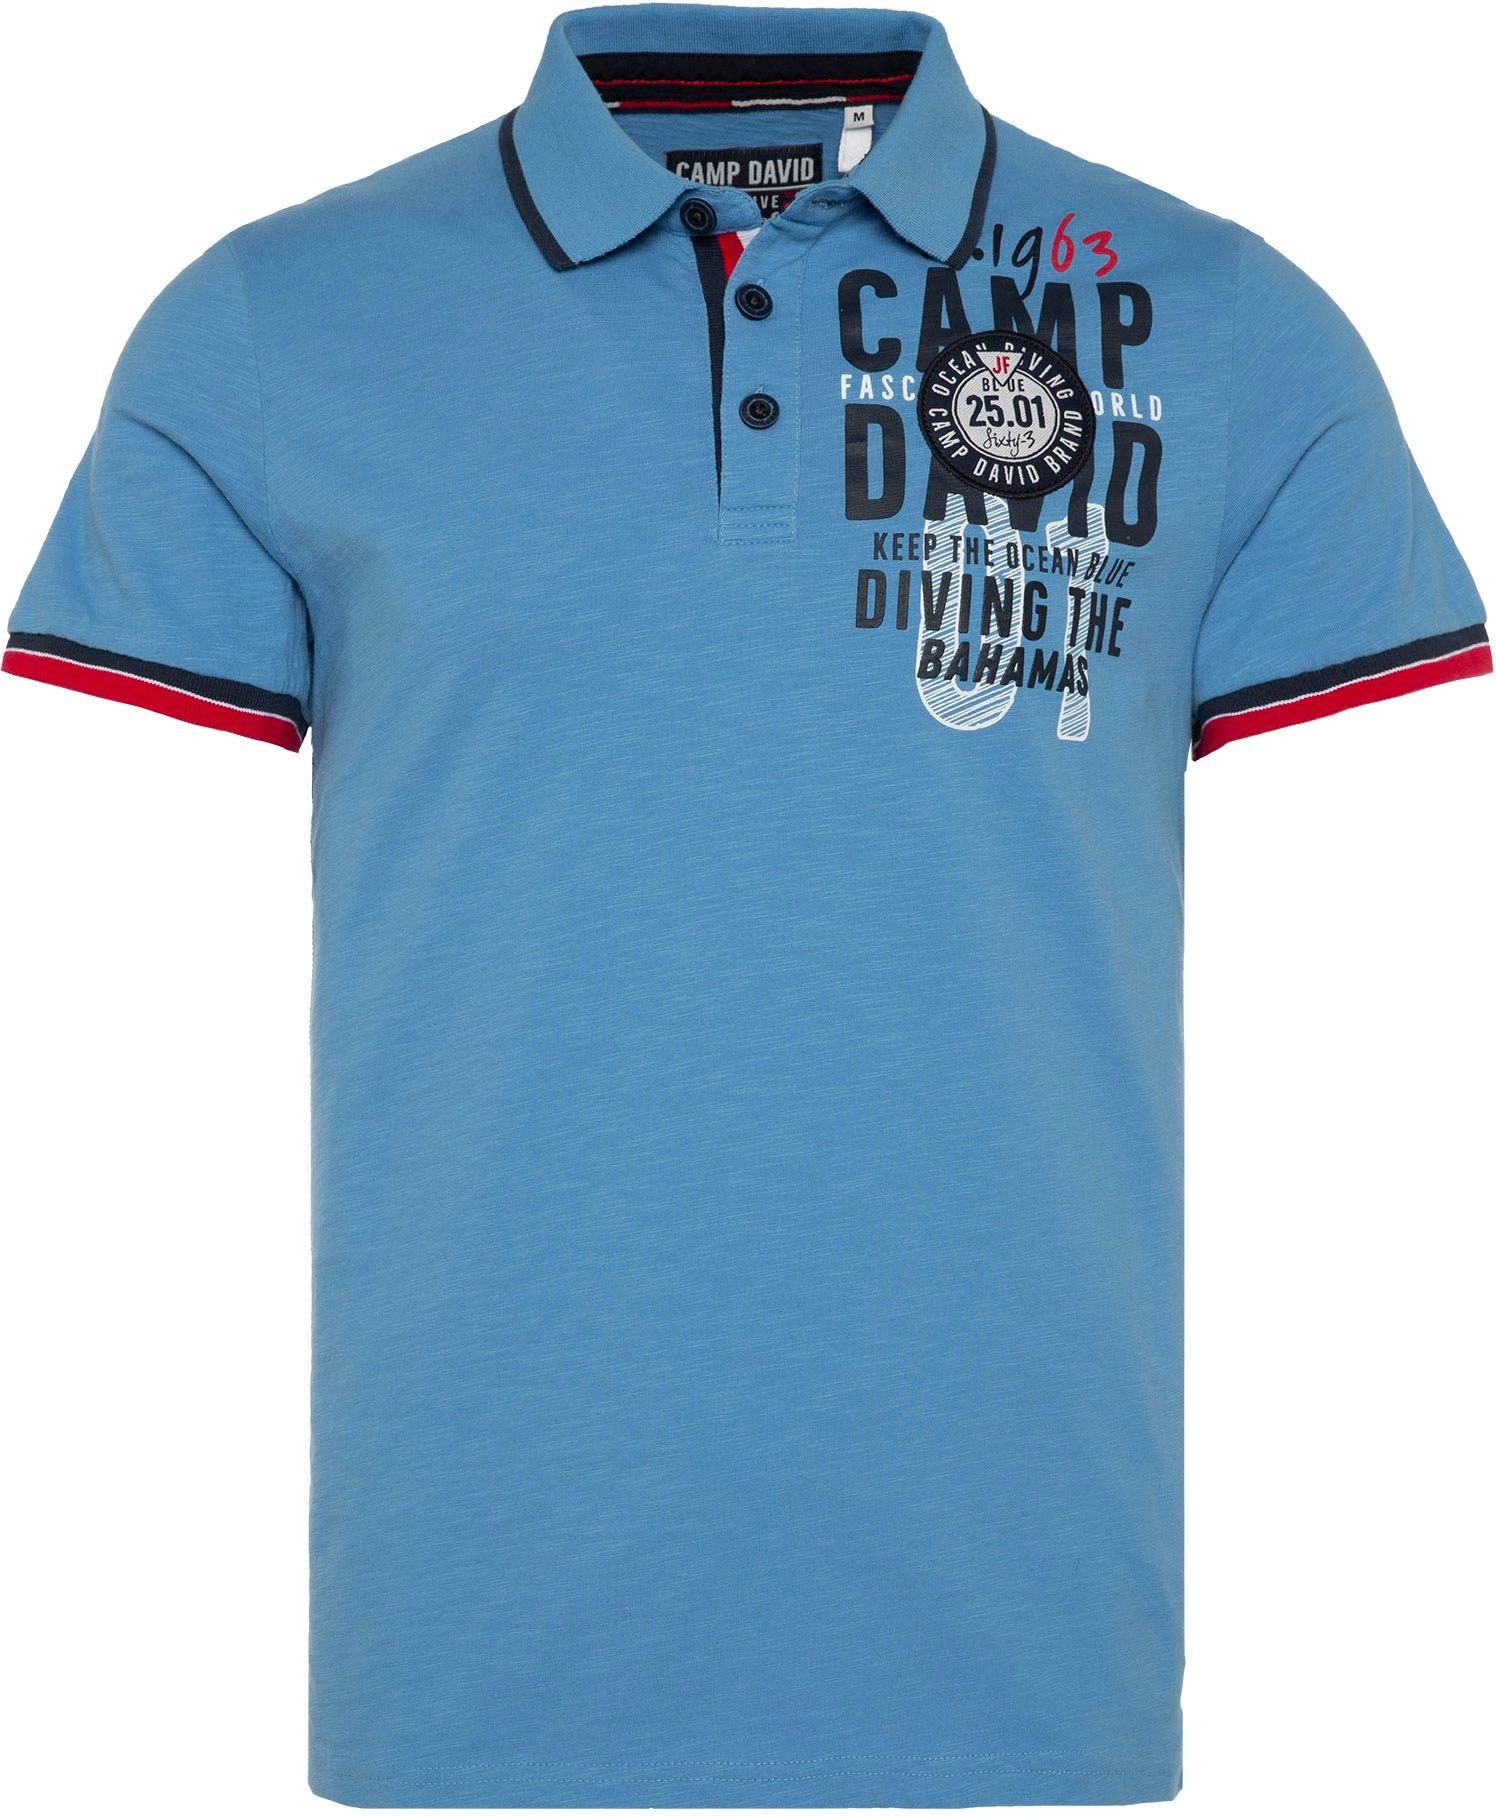 CAMP DAVID Poloshirt Kontrastnähten scuba blue mit